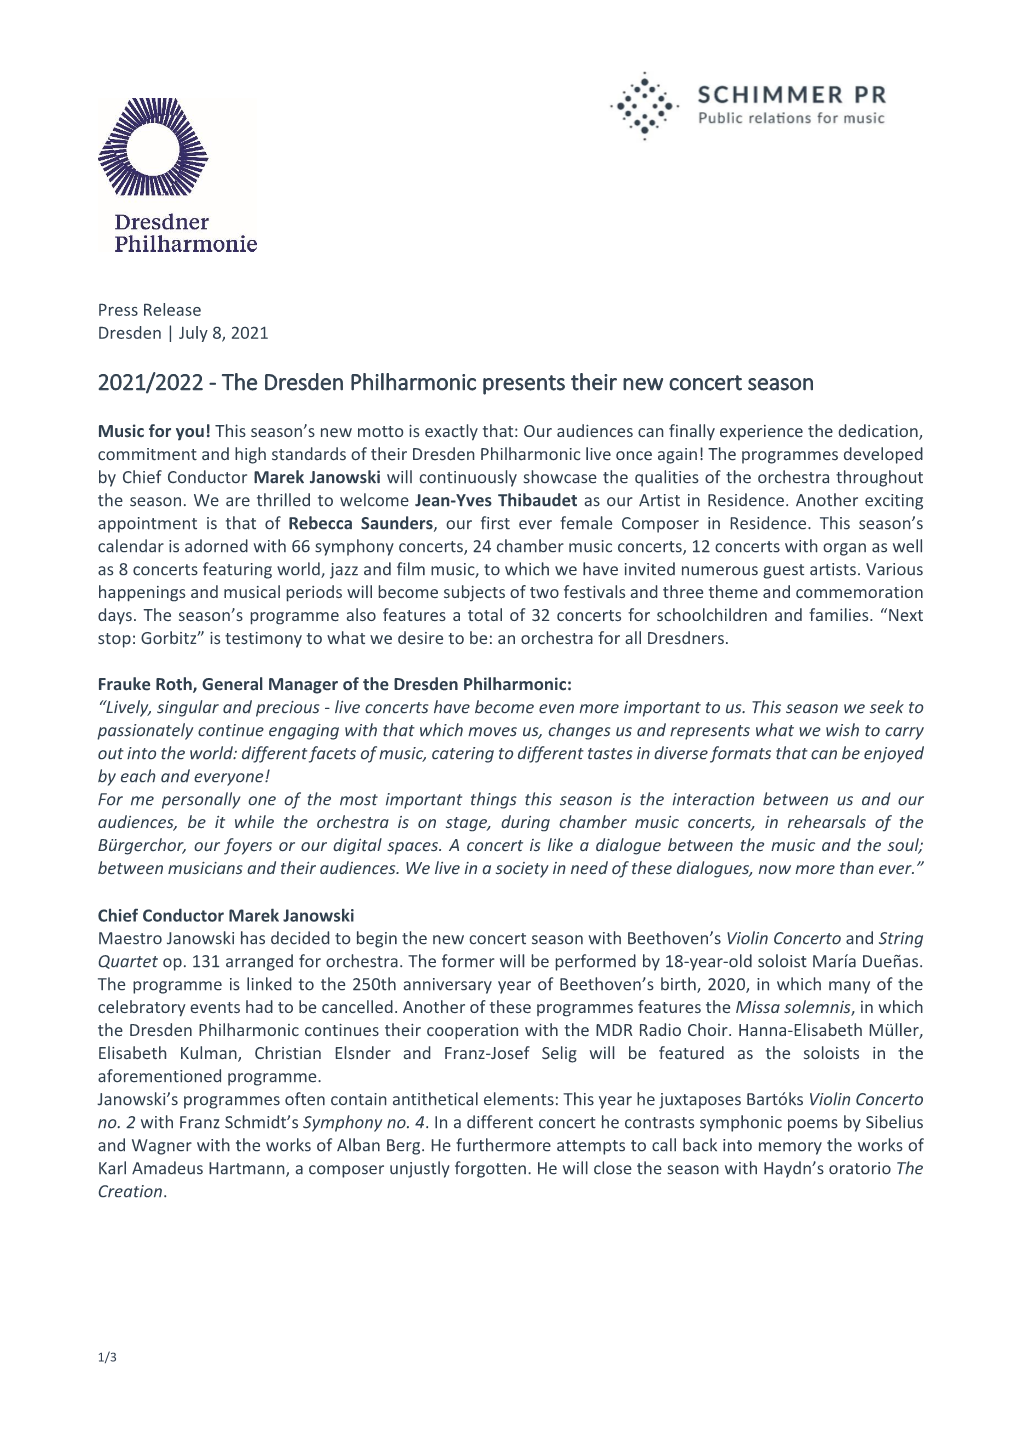 2021/2022 - the Dresden Philharmonic Presents Their New Concert Season